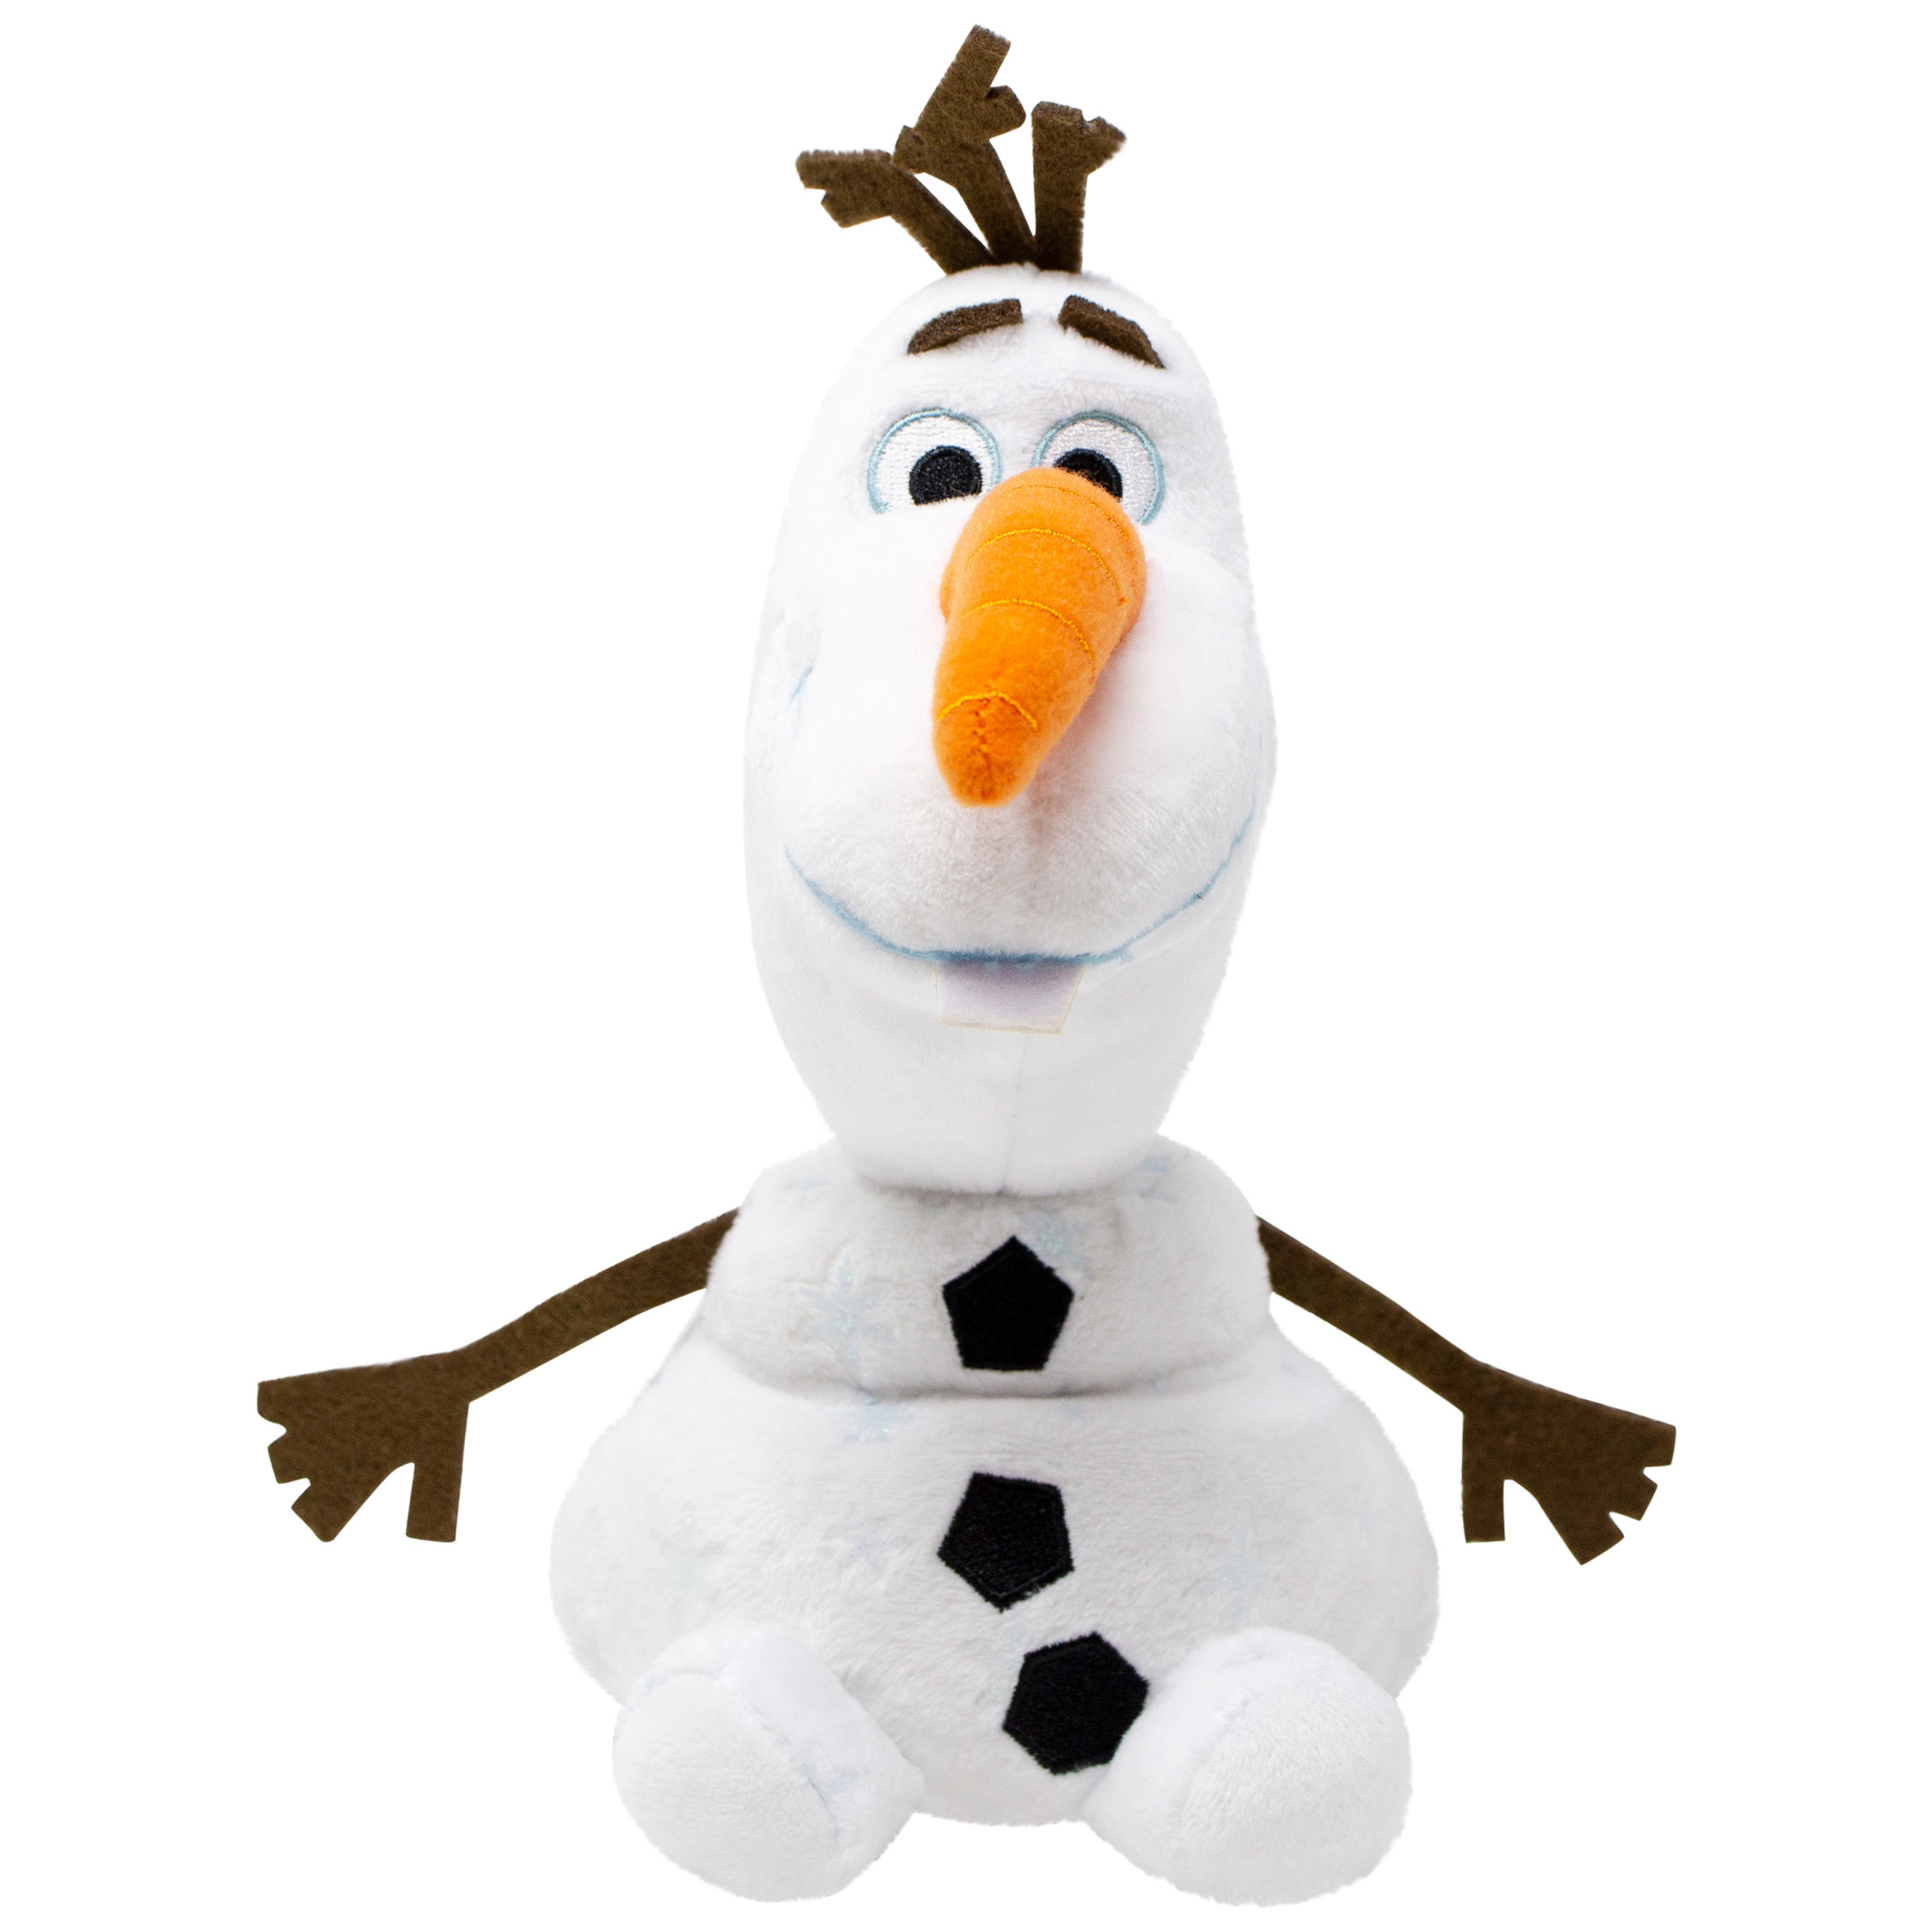 Disney Frozen 2 Olaf Snowman Plush Doll